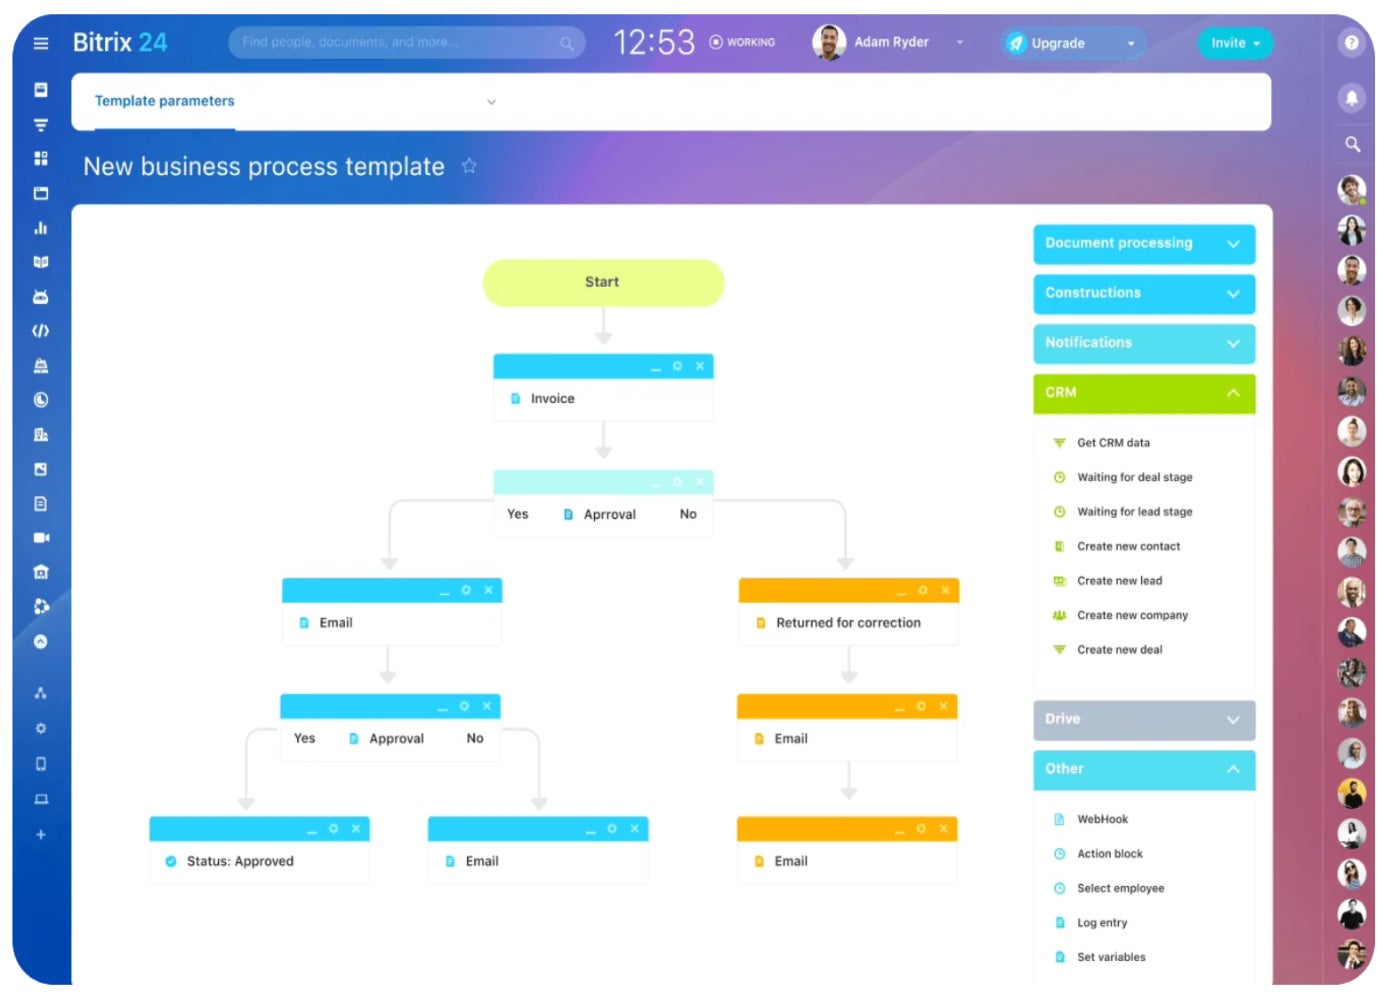 Bitrix24 new business process workflow template.